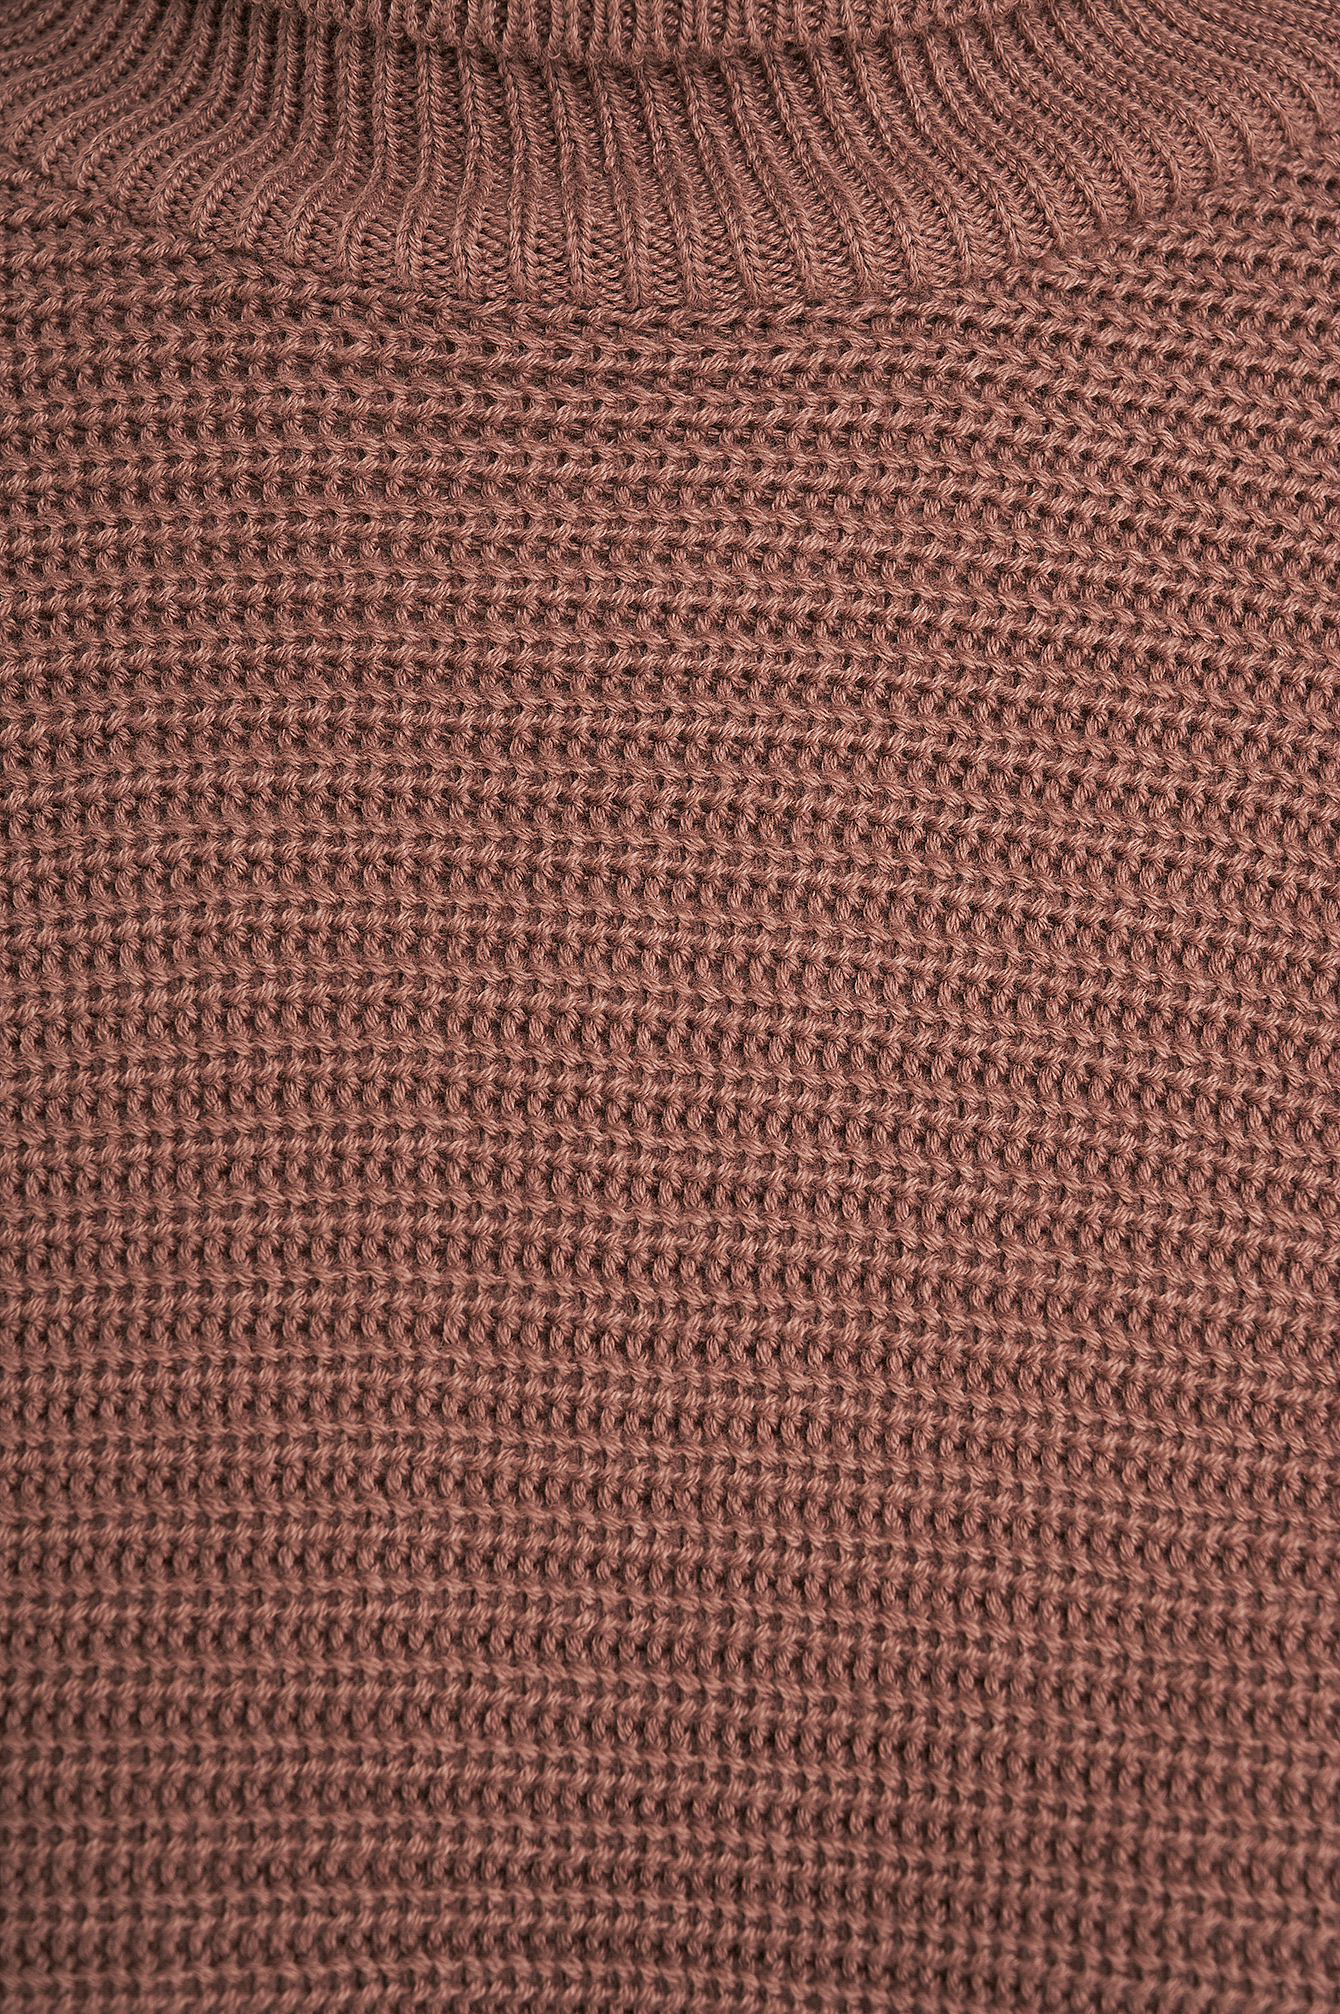 Dusty Dark Pink Folded Knitted Sweater